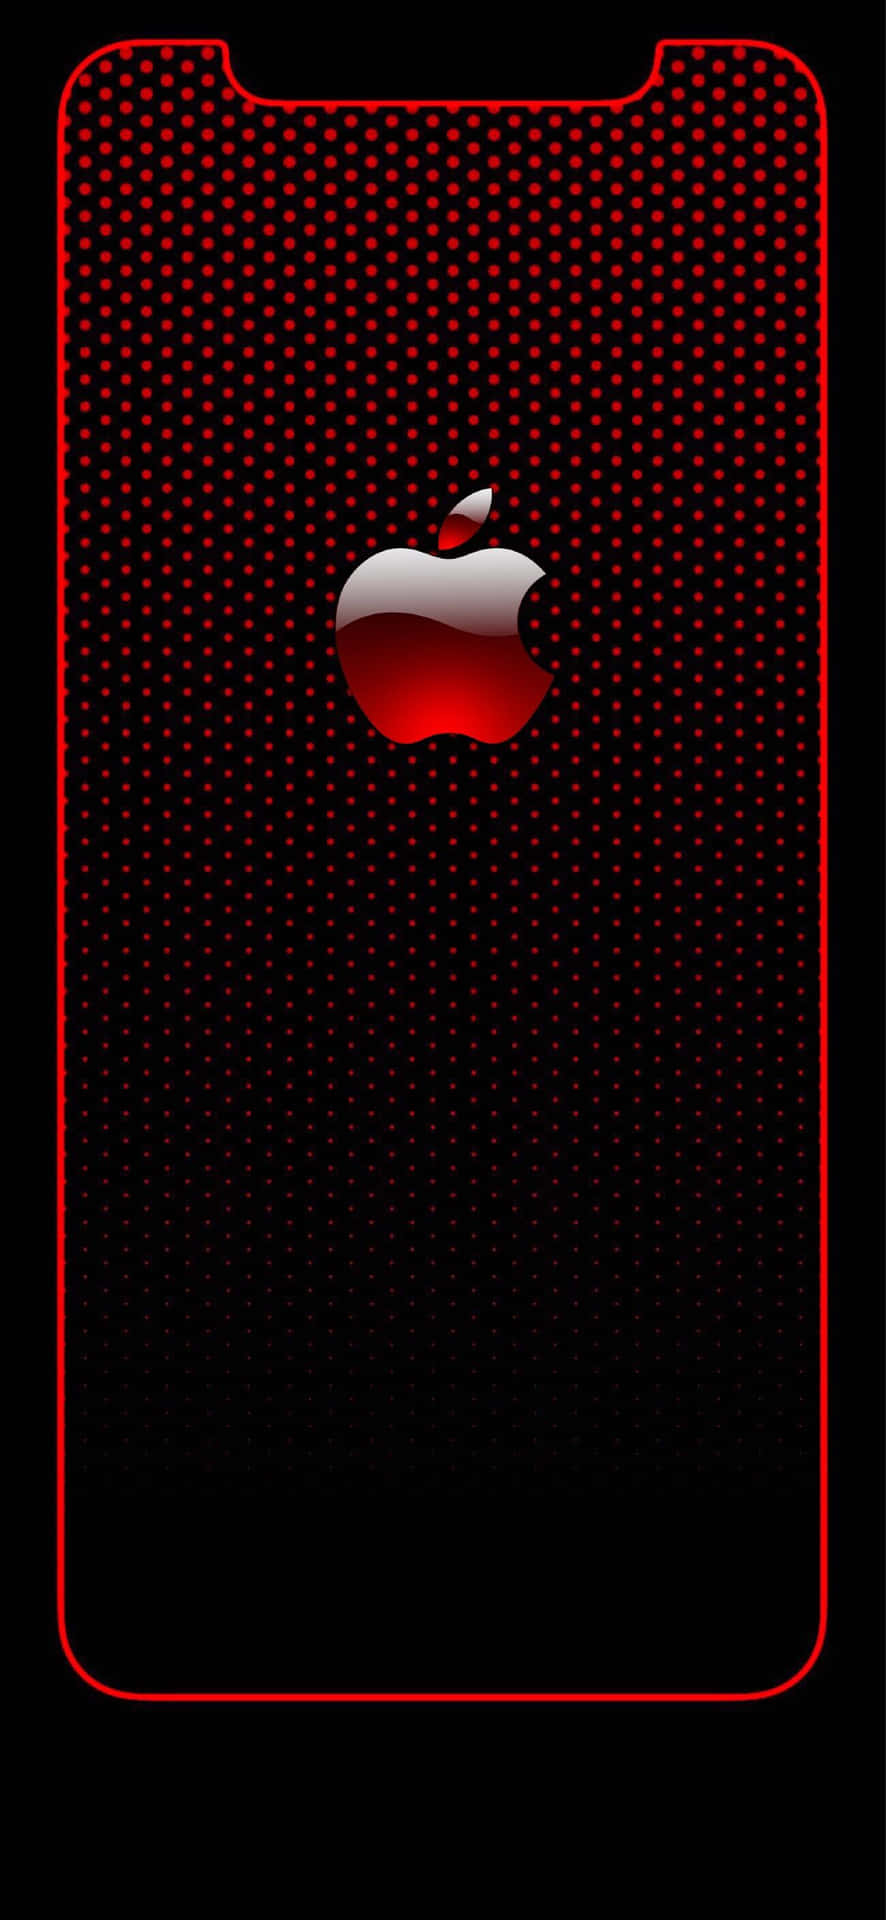 Apple iPhone X Logo Wallpaper